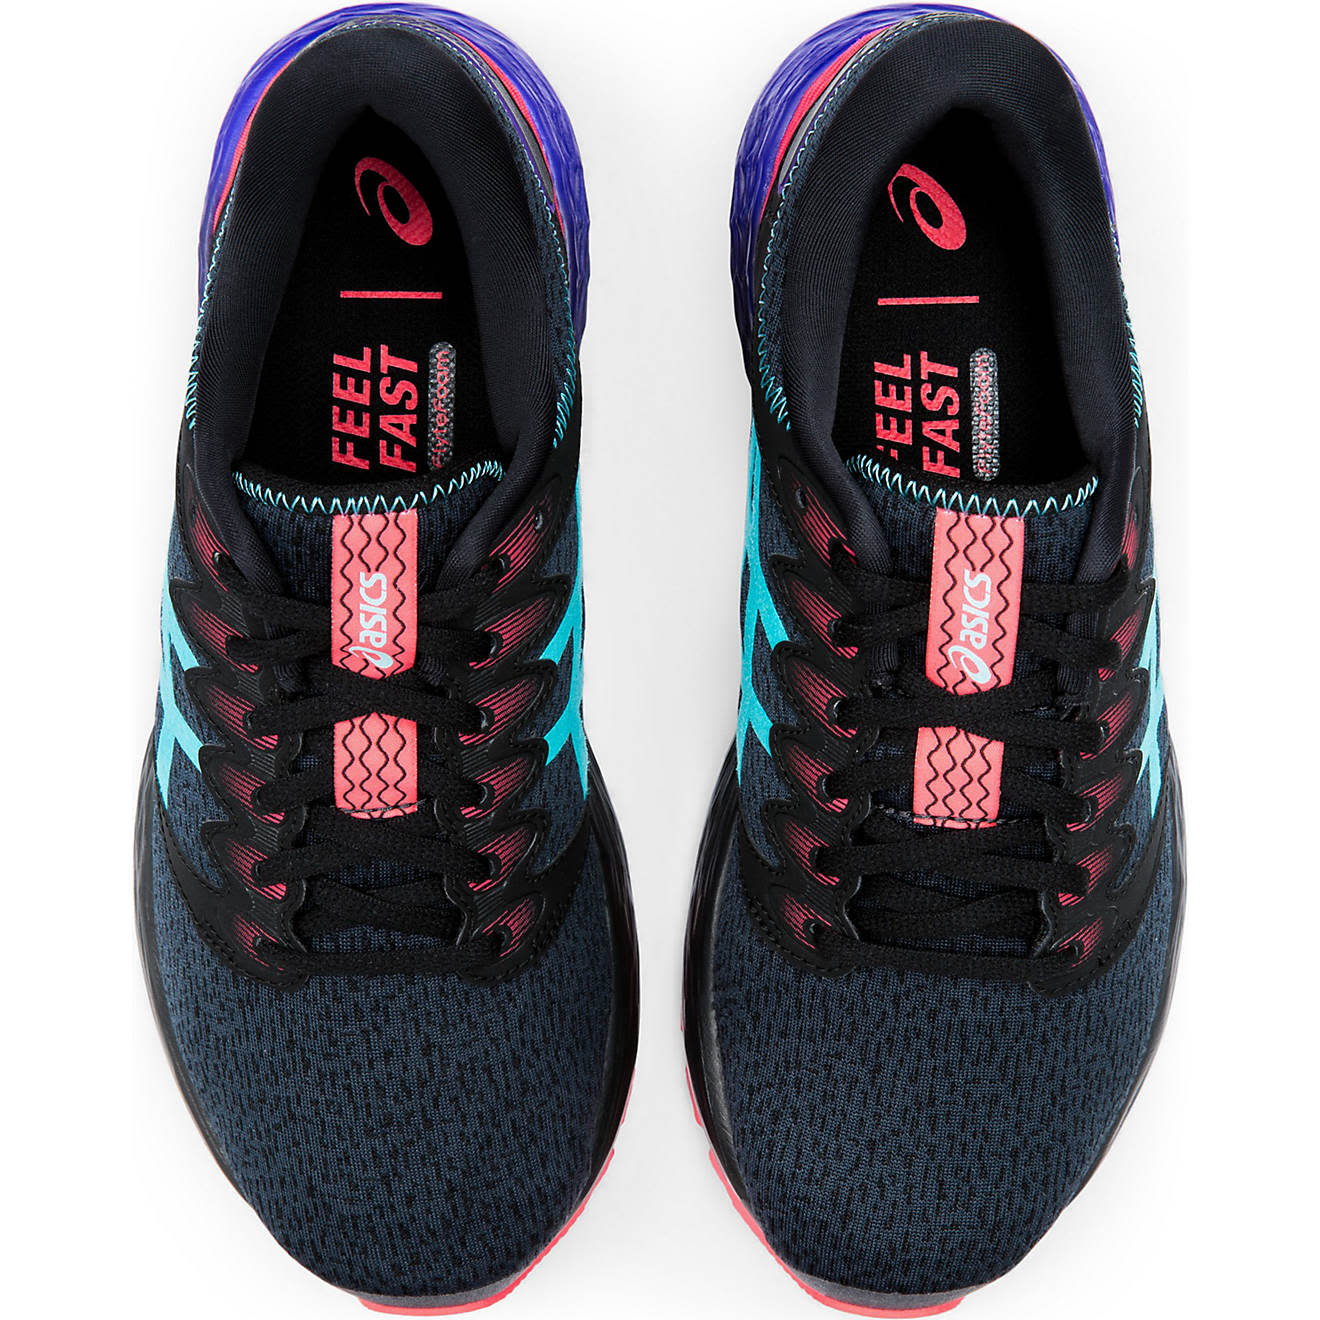 Best treadmill running shoes: Nike, Asics